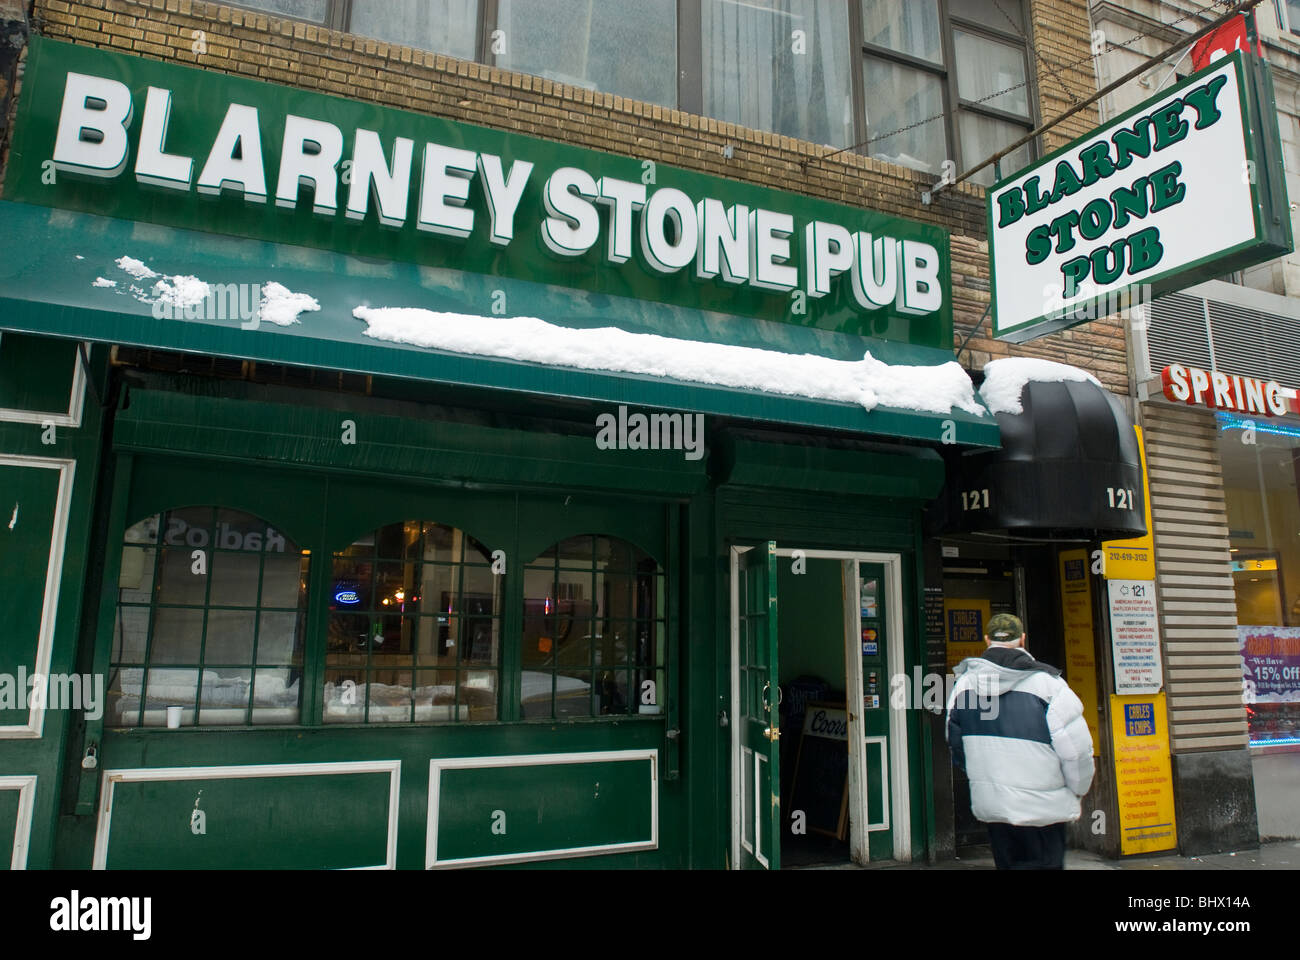 The Blarney Stone Pub in Lower Manhattan in New York Stock Photo